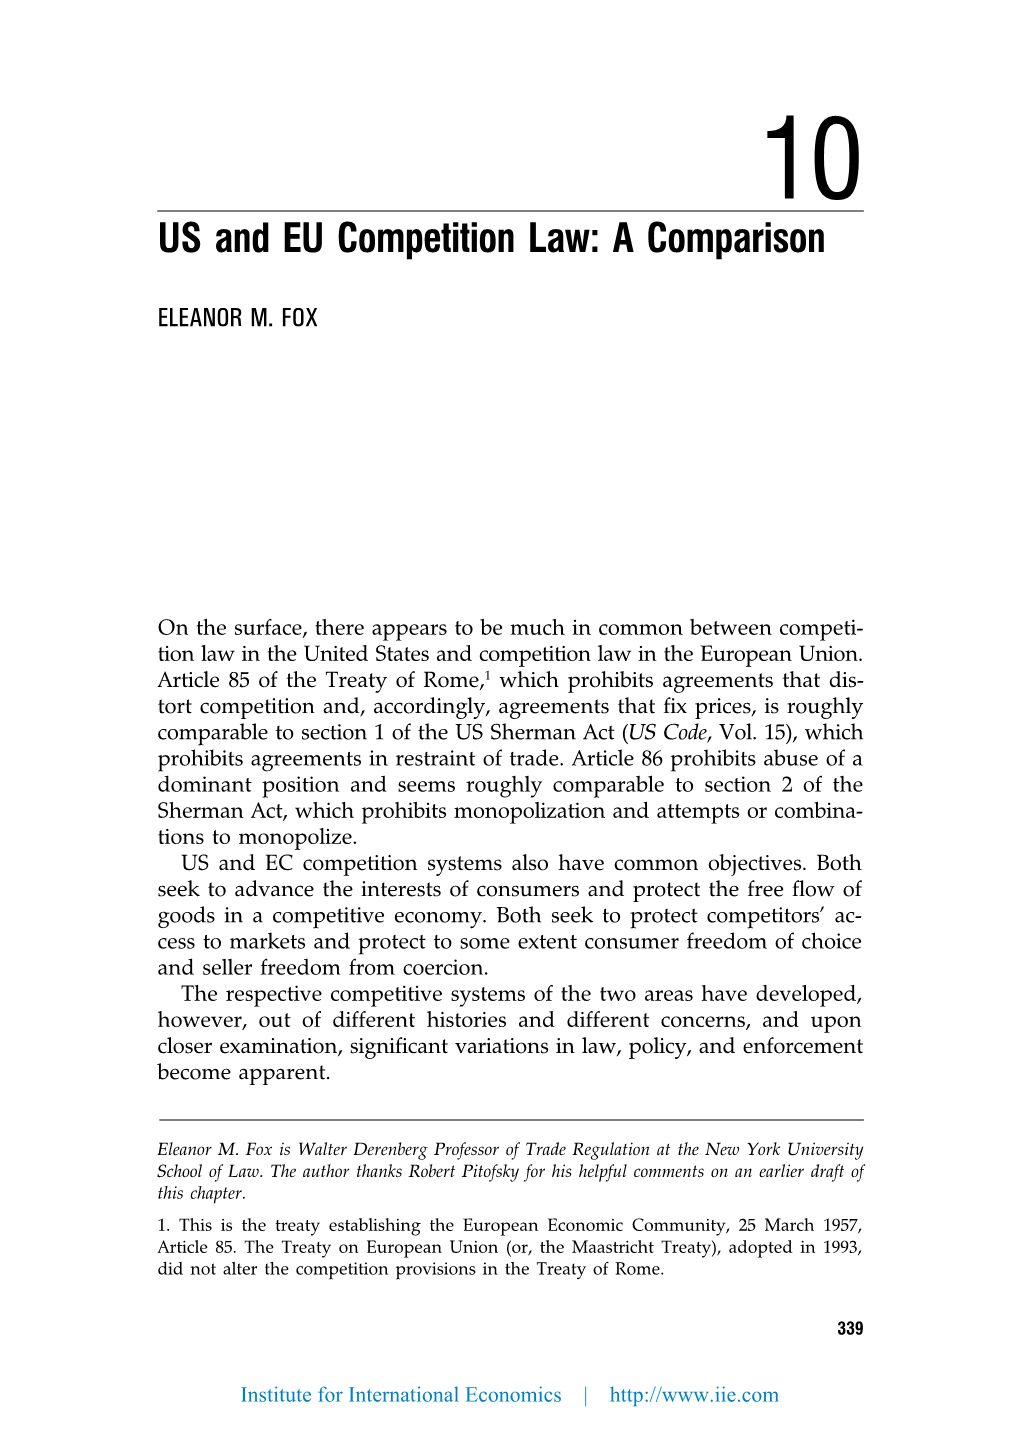 US and EU Competition Law: a Comparison